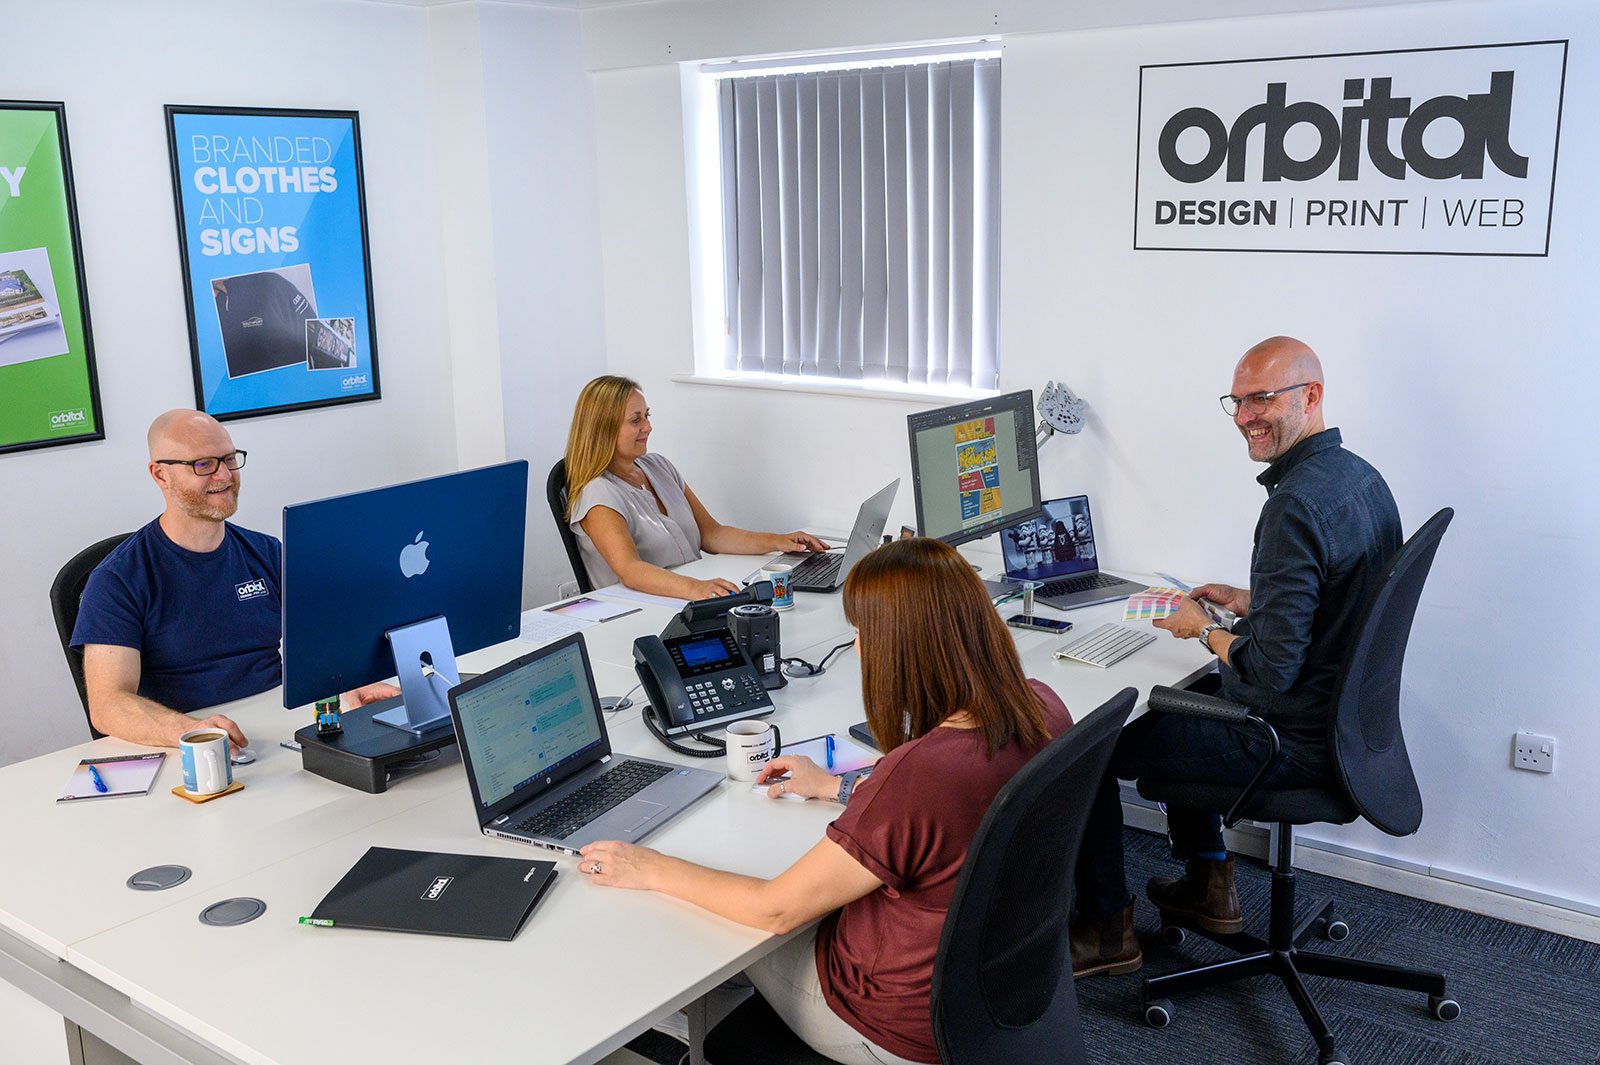 Orbital Creative Design team at work